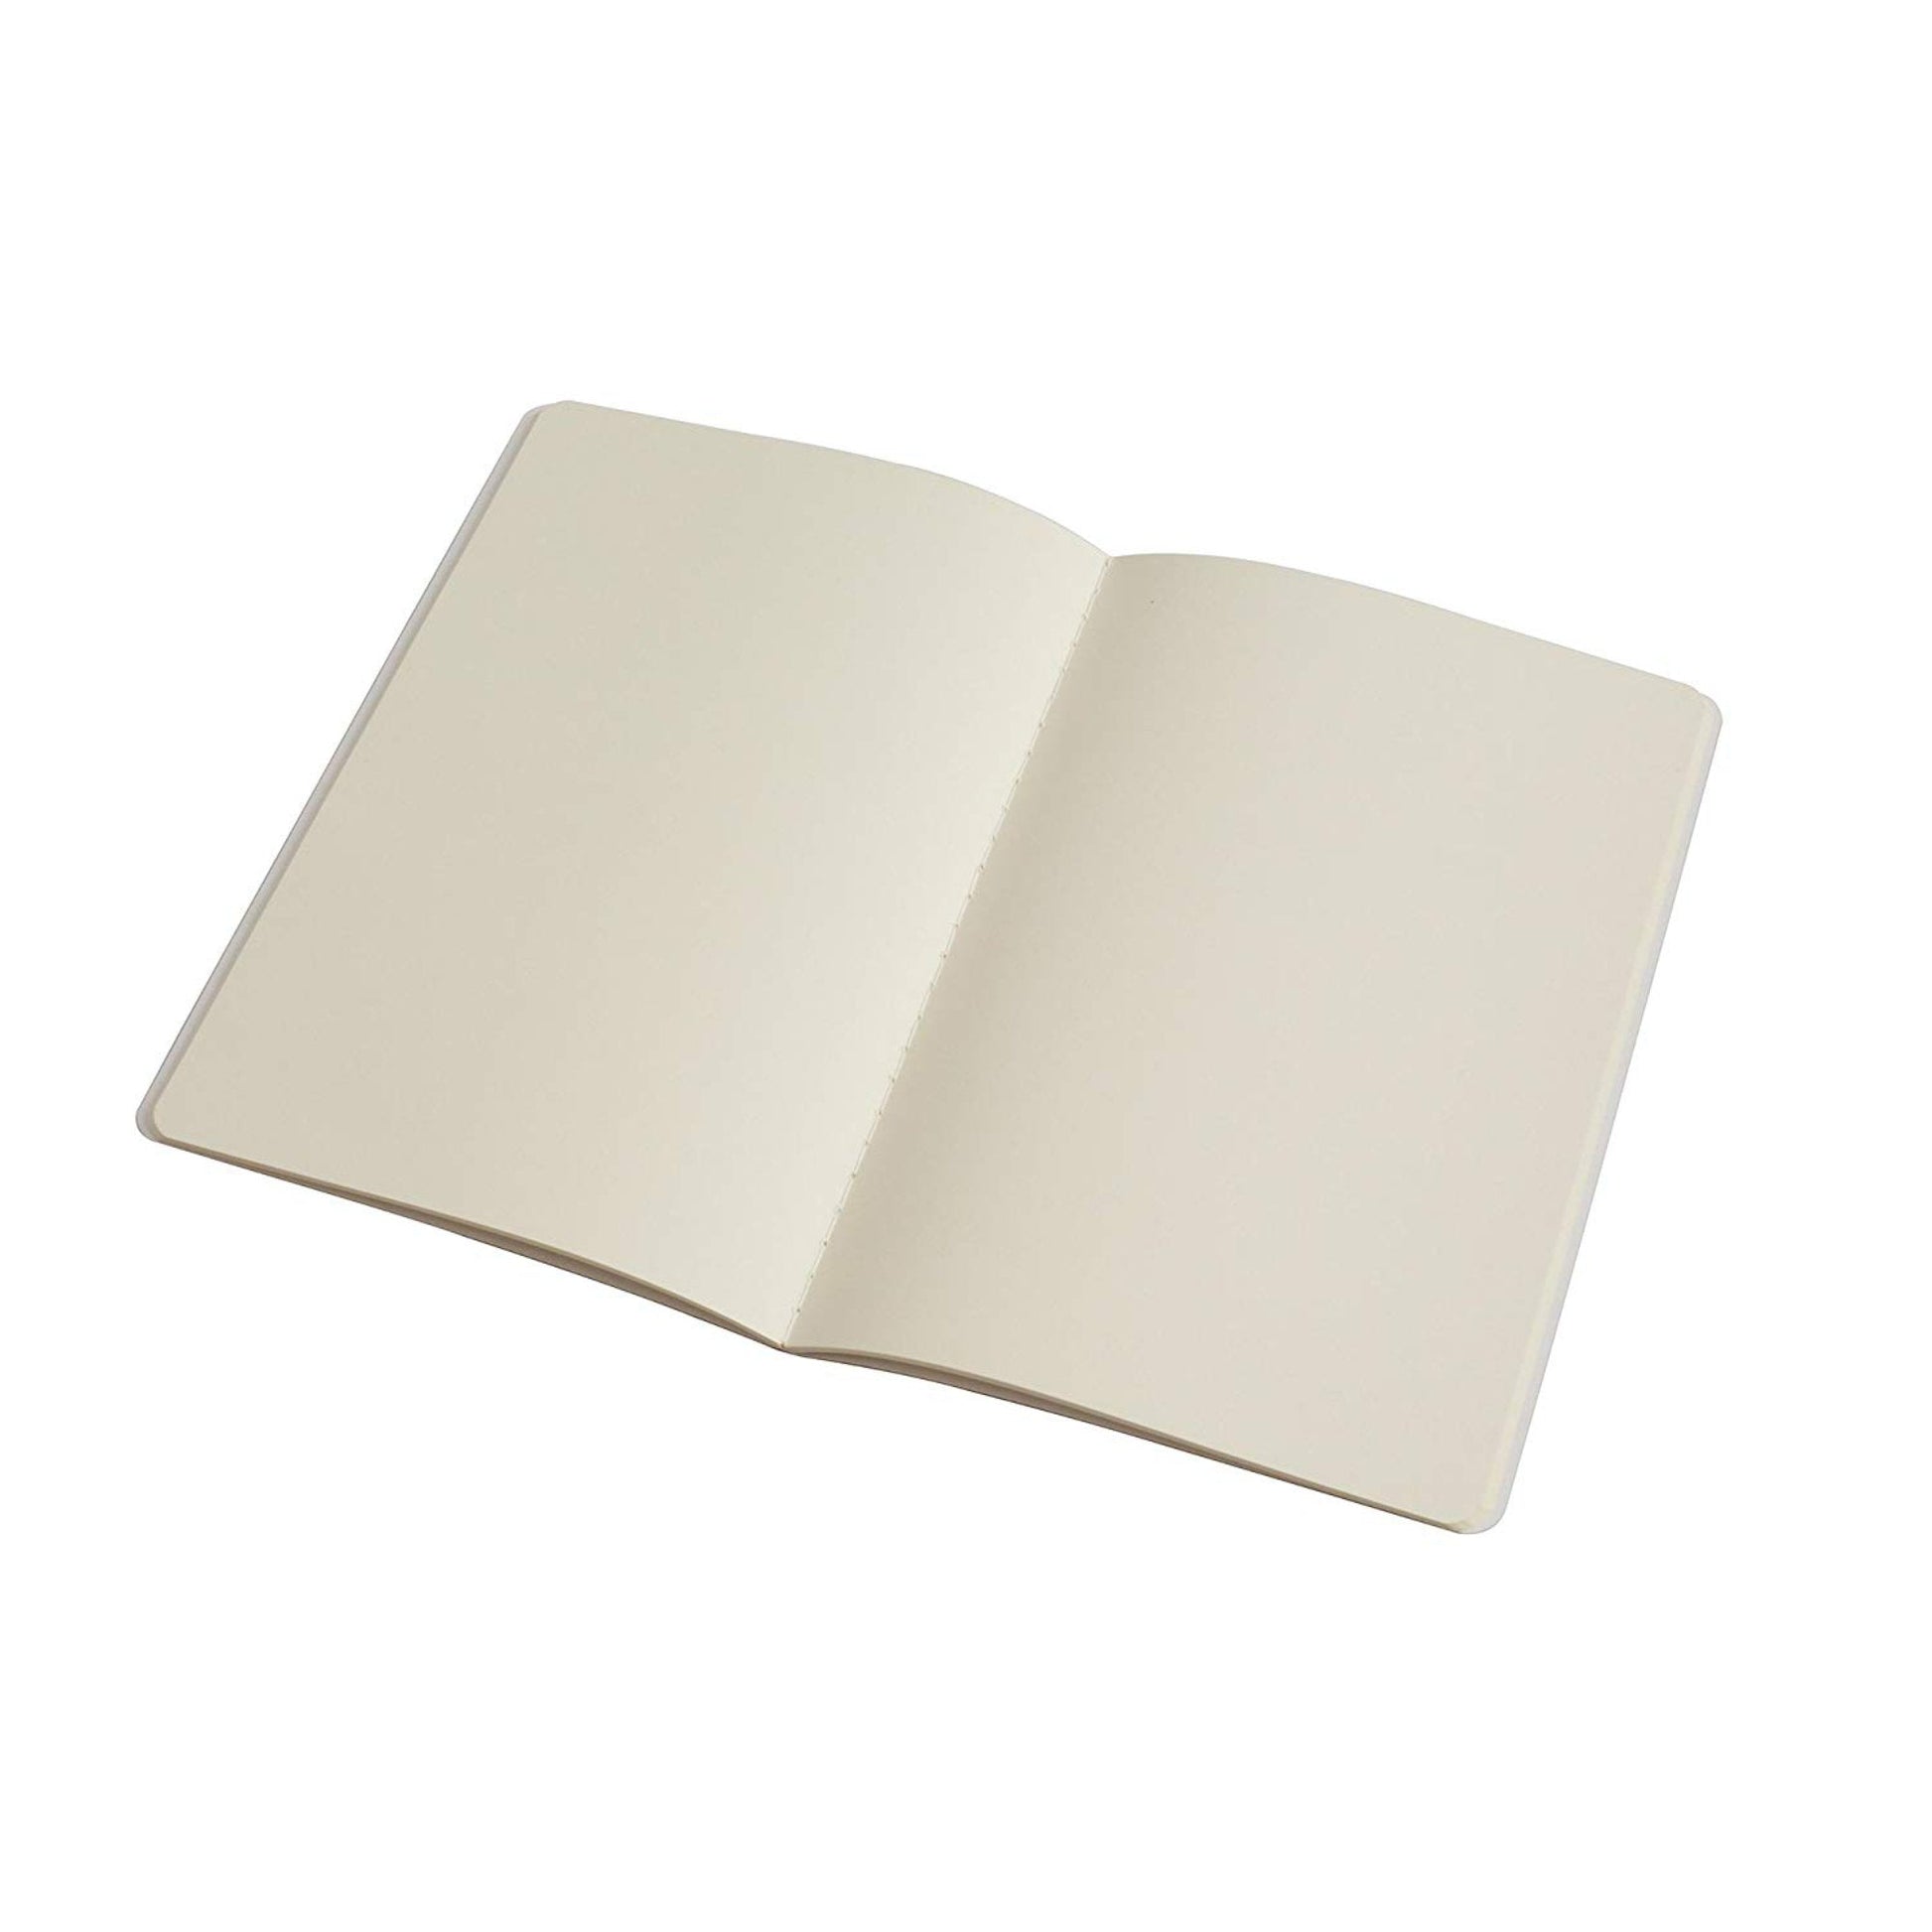 PinkPolish Design Notebook "Rainy Day" Notebook / Sketchbook / Journal